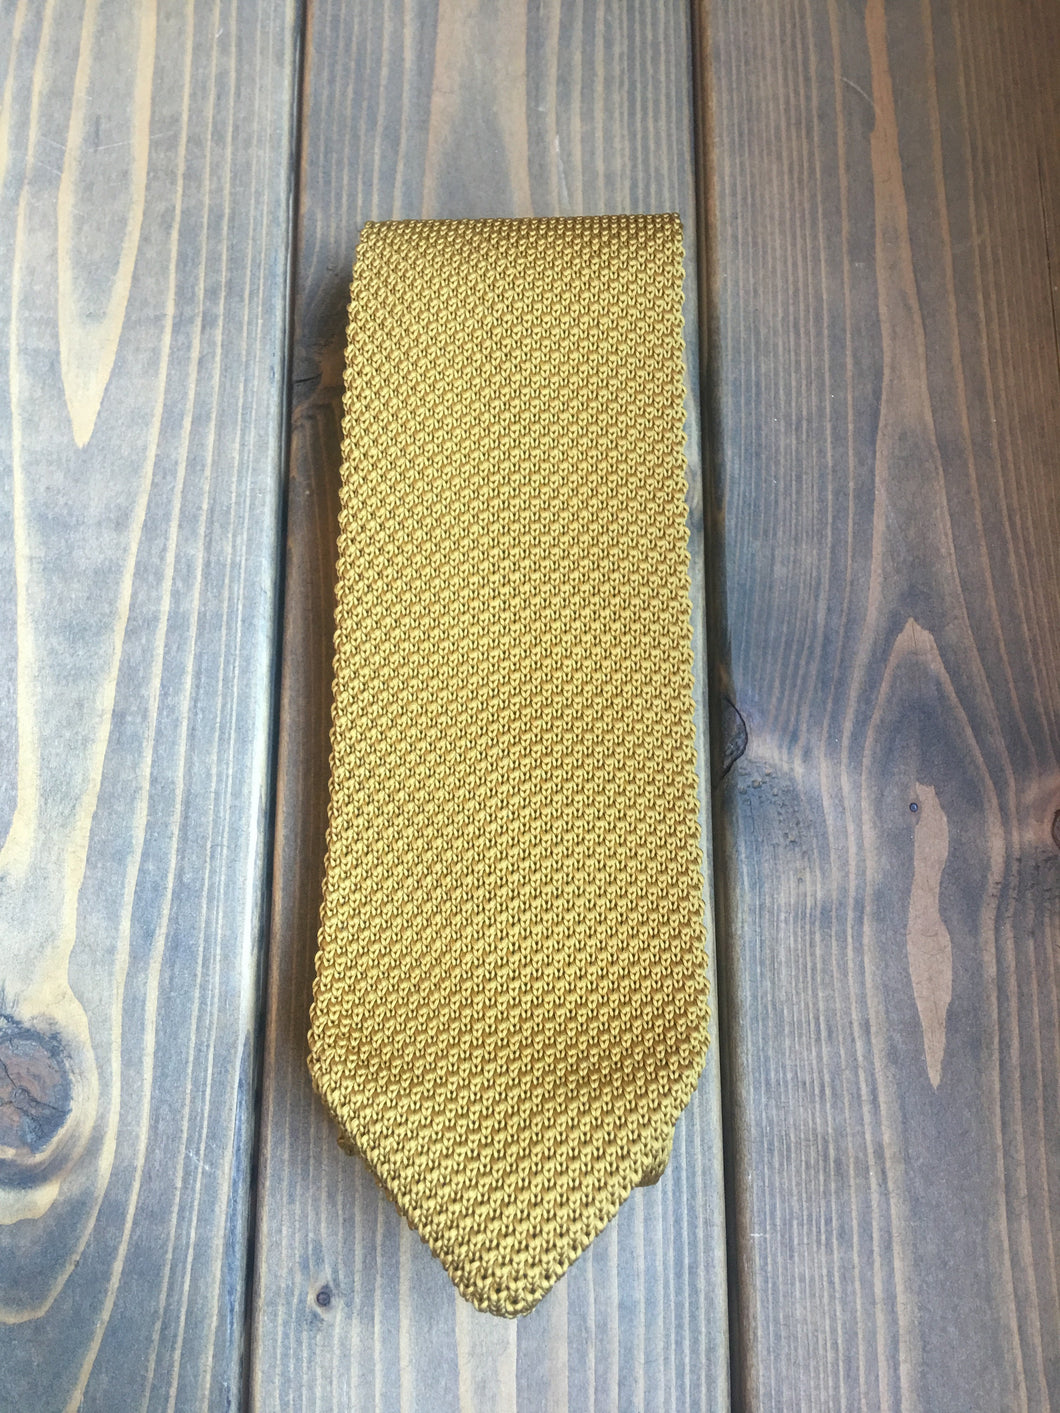 Mustard Yellow Knitted Tie